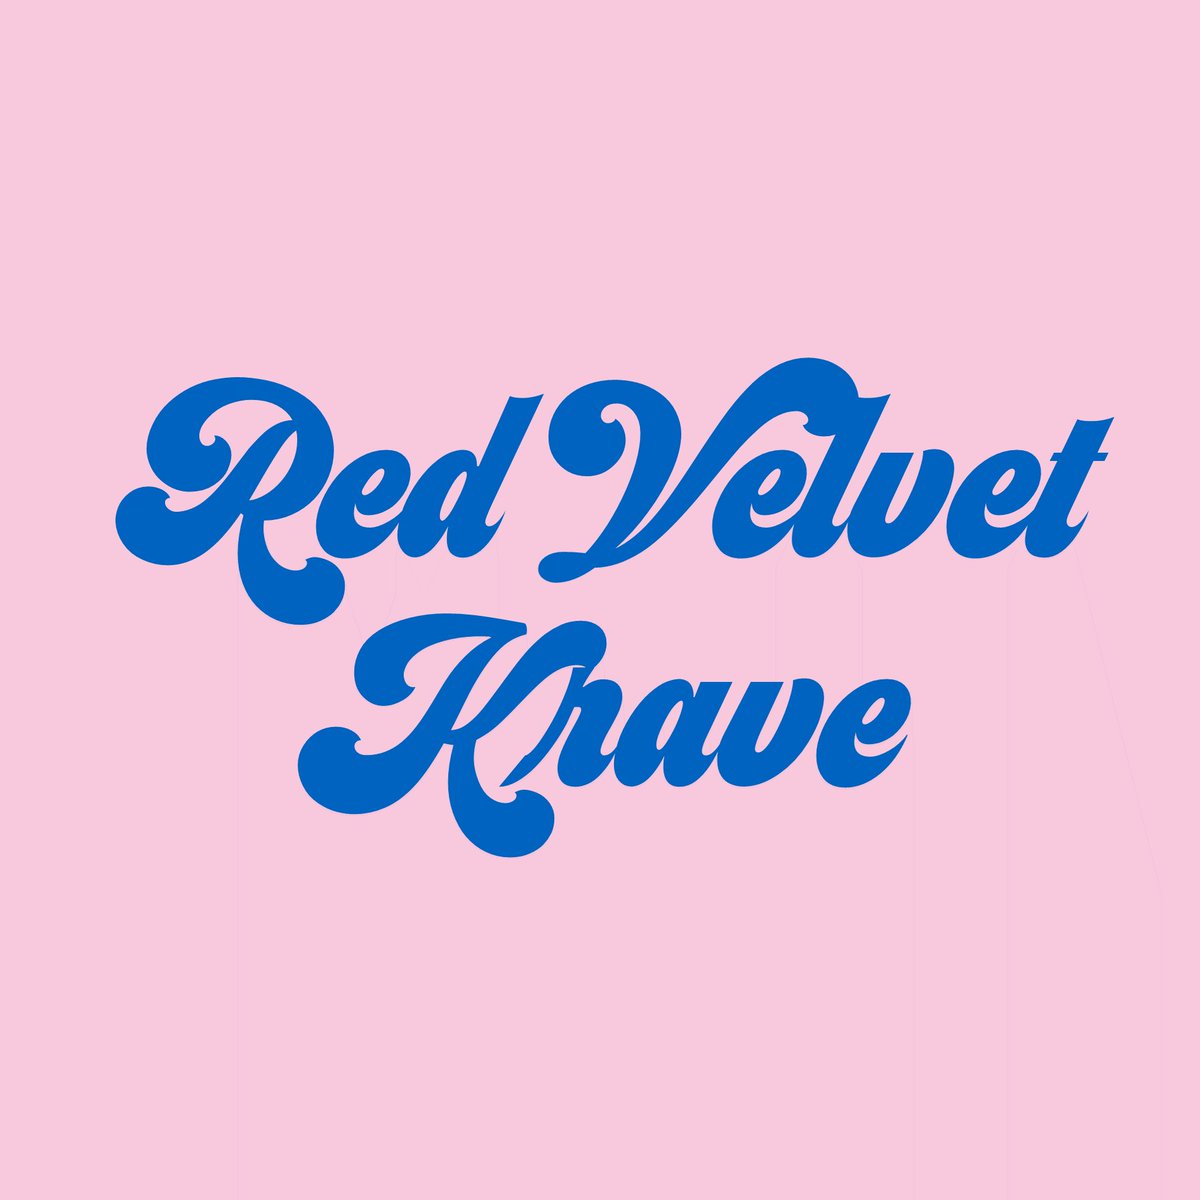 New profile pic 🐇🐇🐇🐇🐇 #IRENE #RedVelvet #아이린 #레드벨벳 @RVsmtown